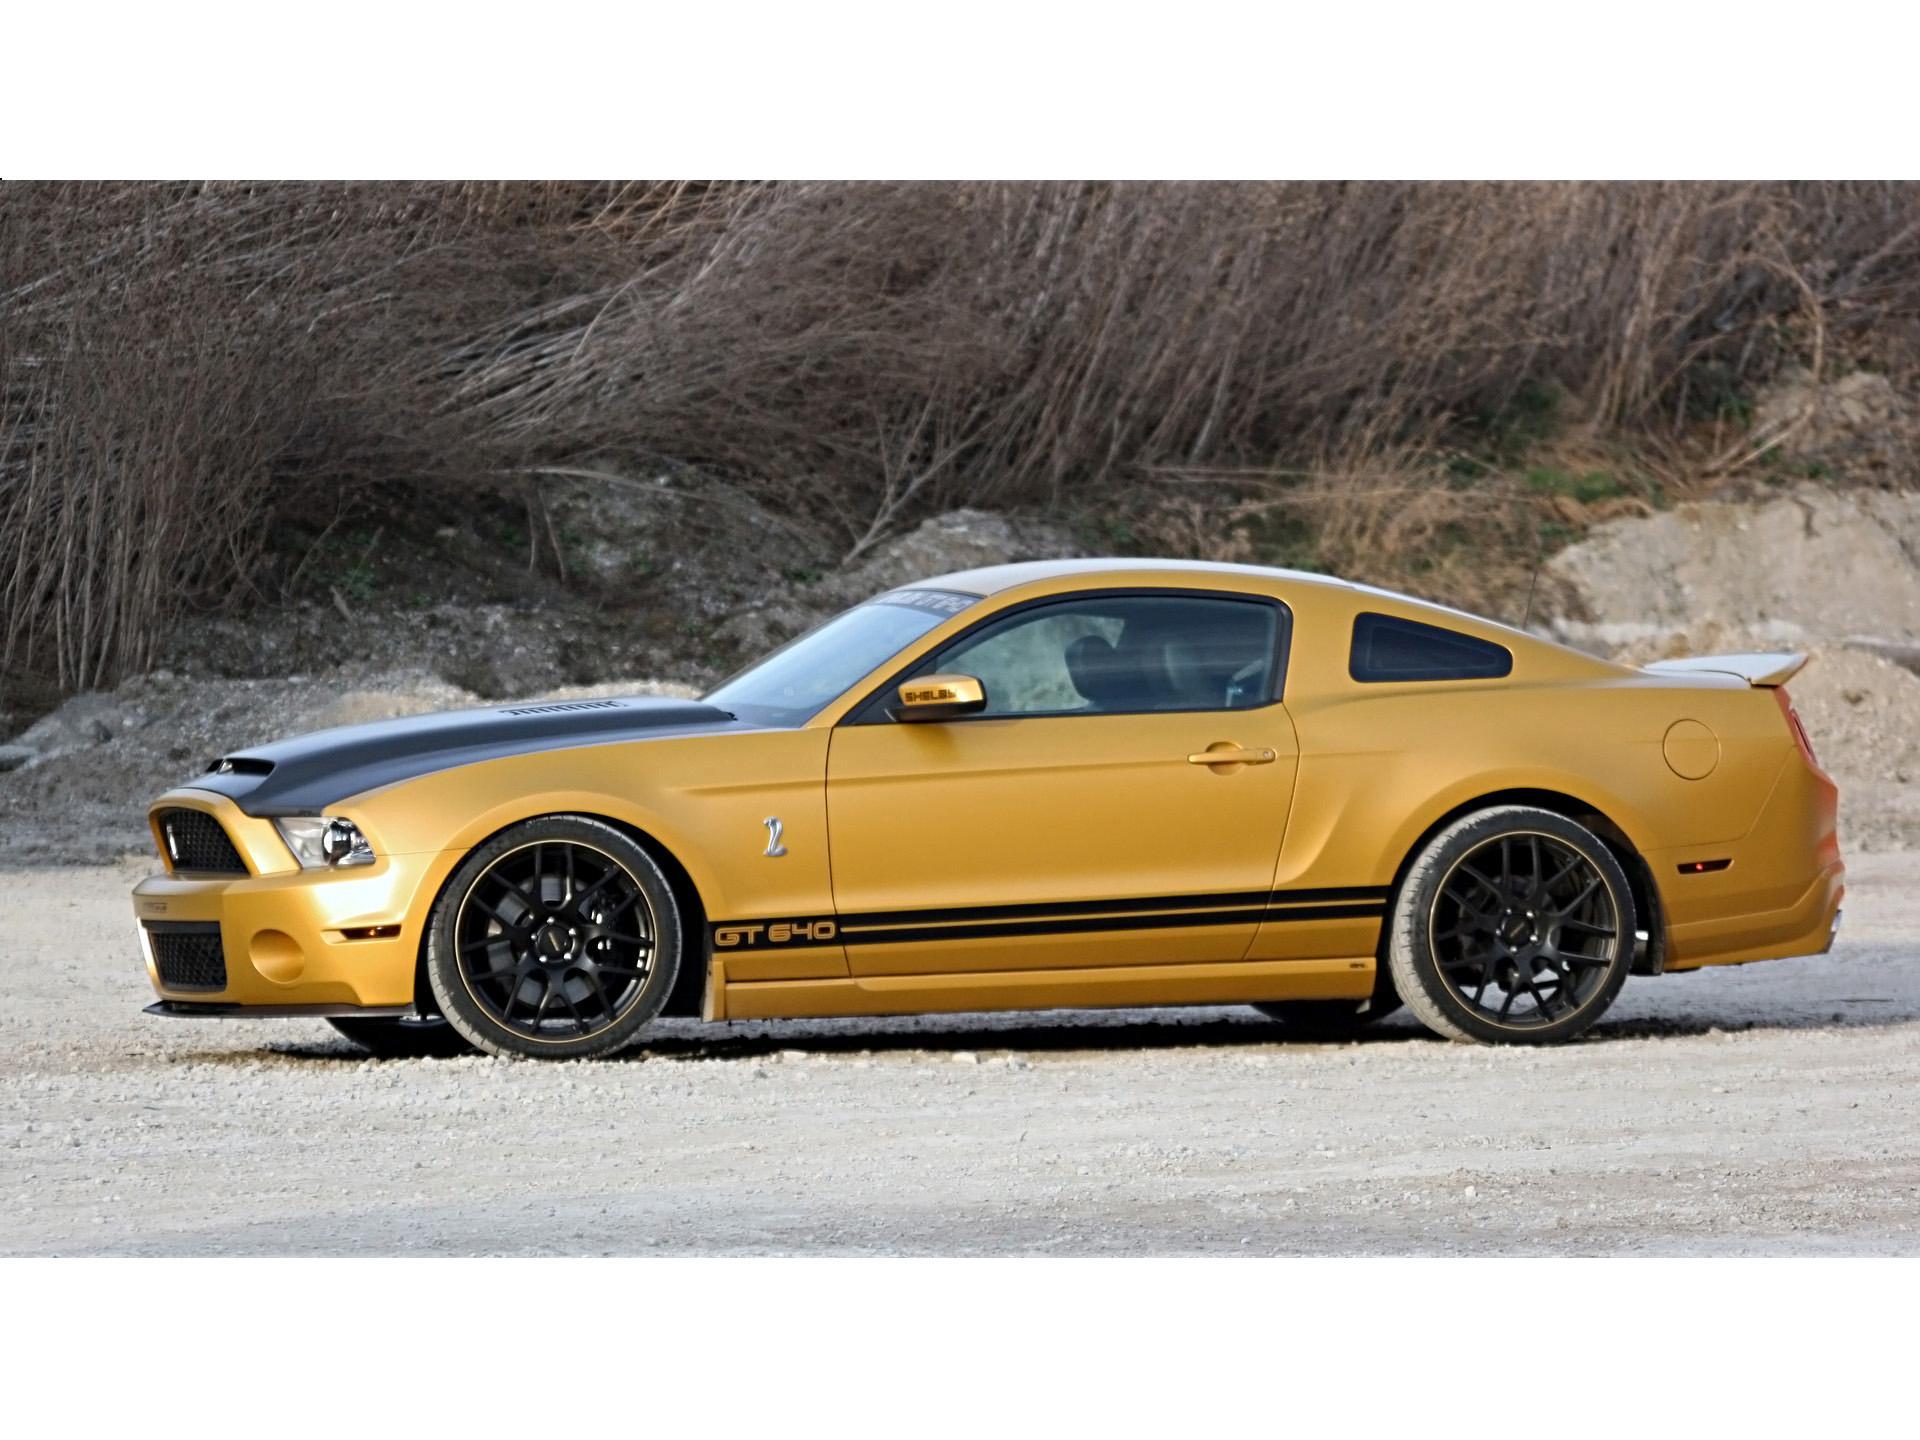 Geiger Mustang GT640 Golden Snake News and Information